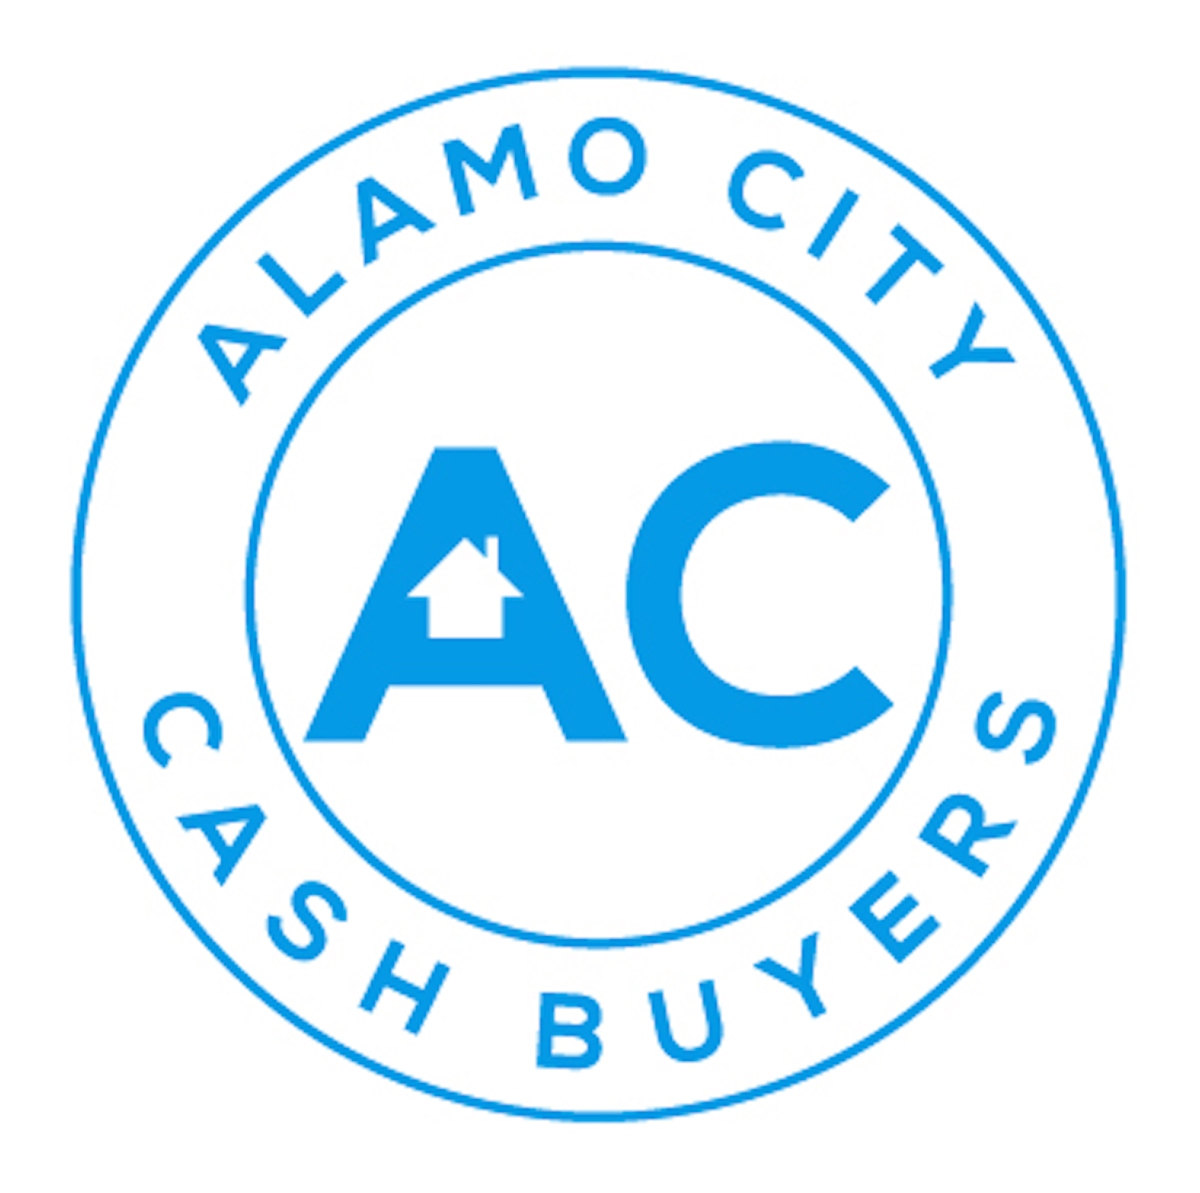 Alamo City Cash Buyers